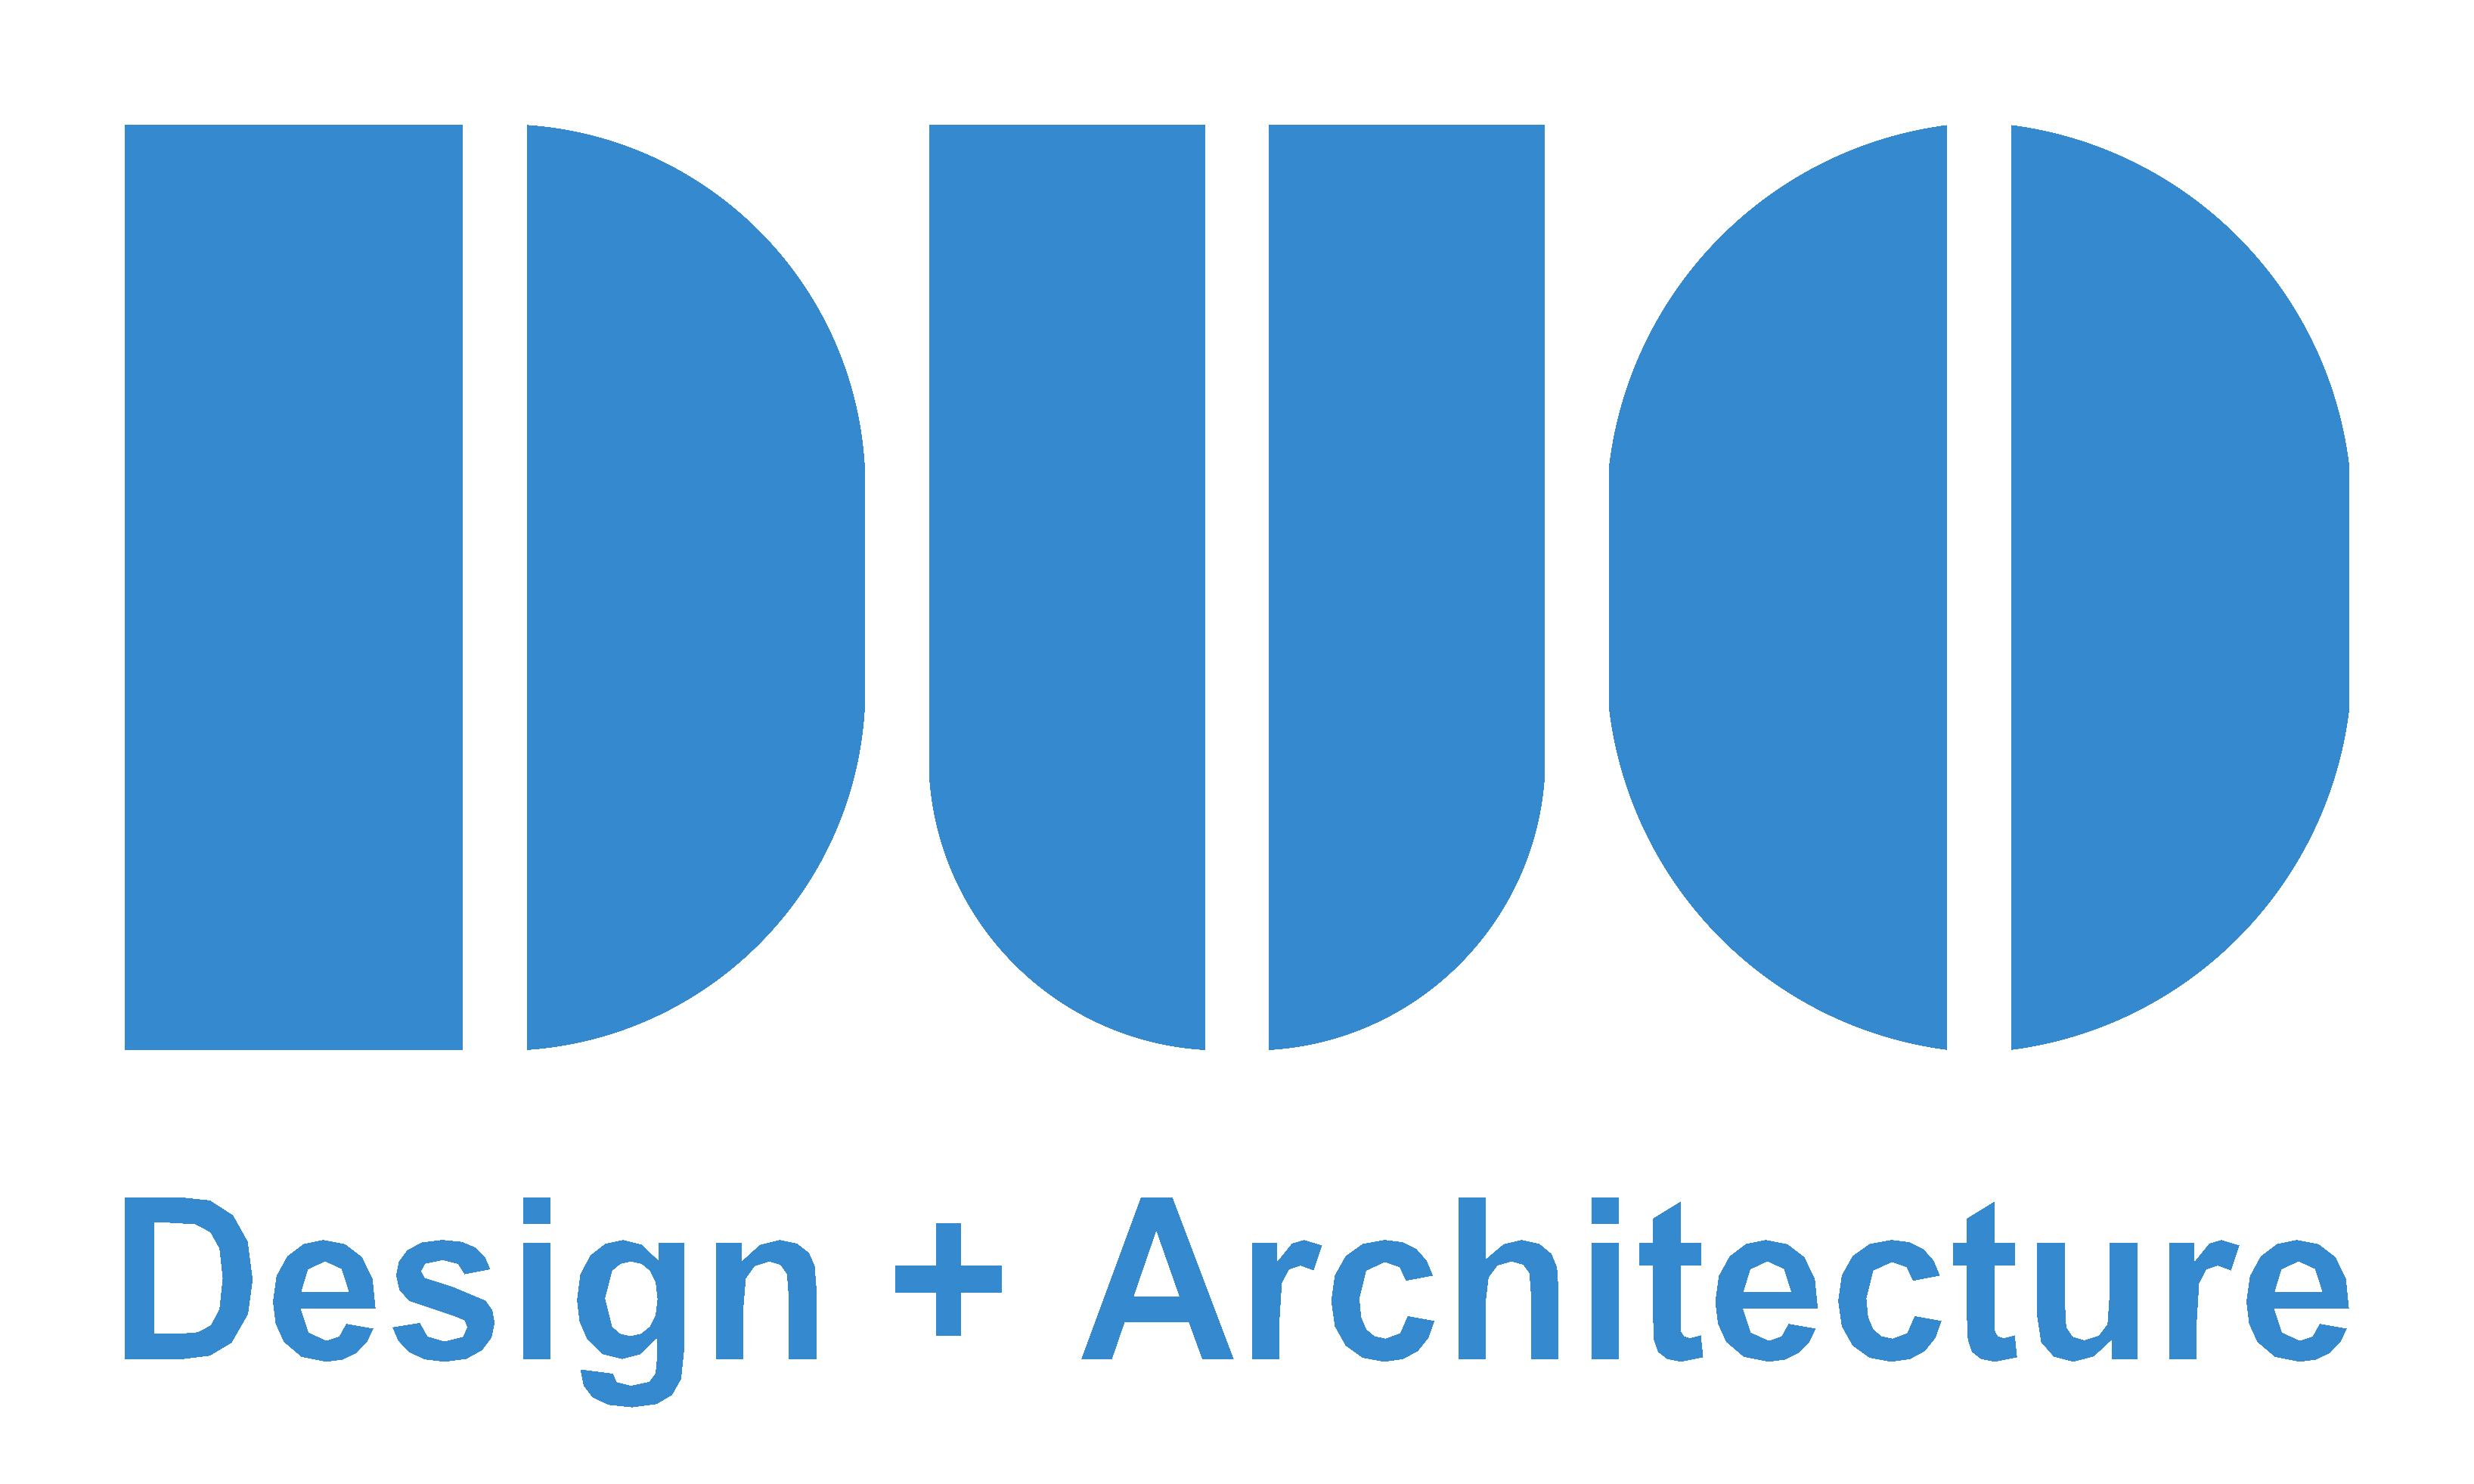 DUO - Design + Architecture